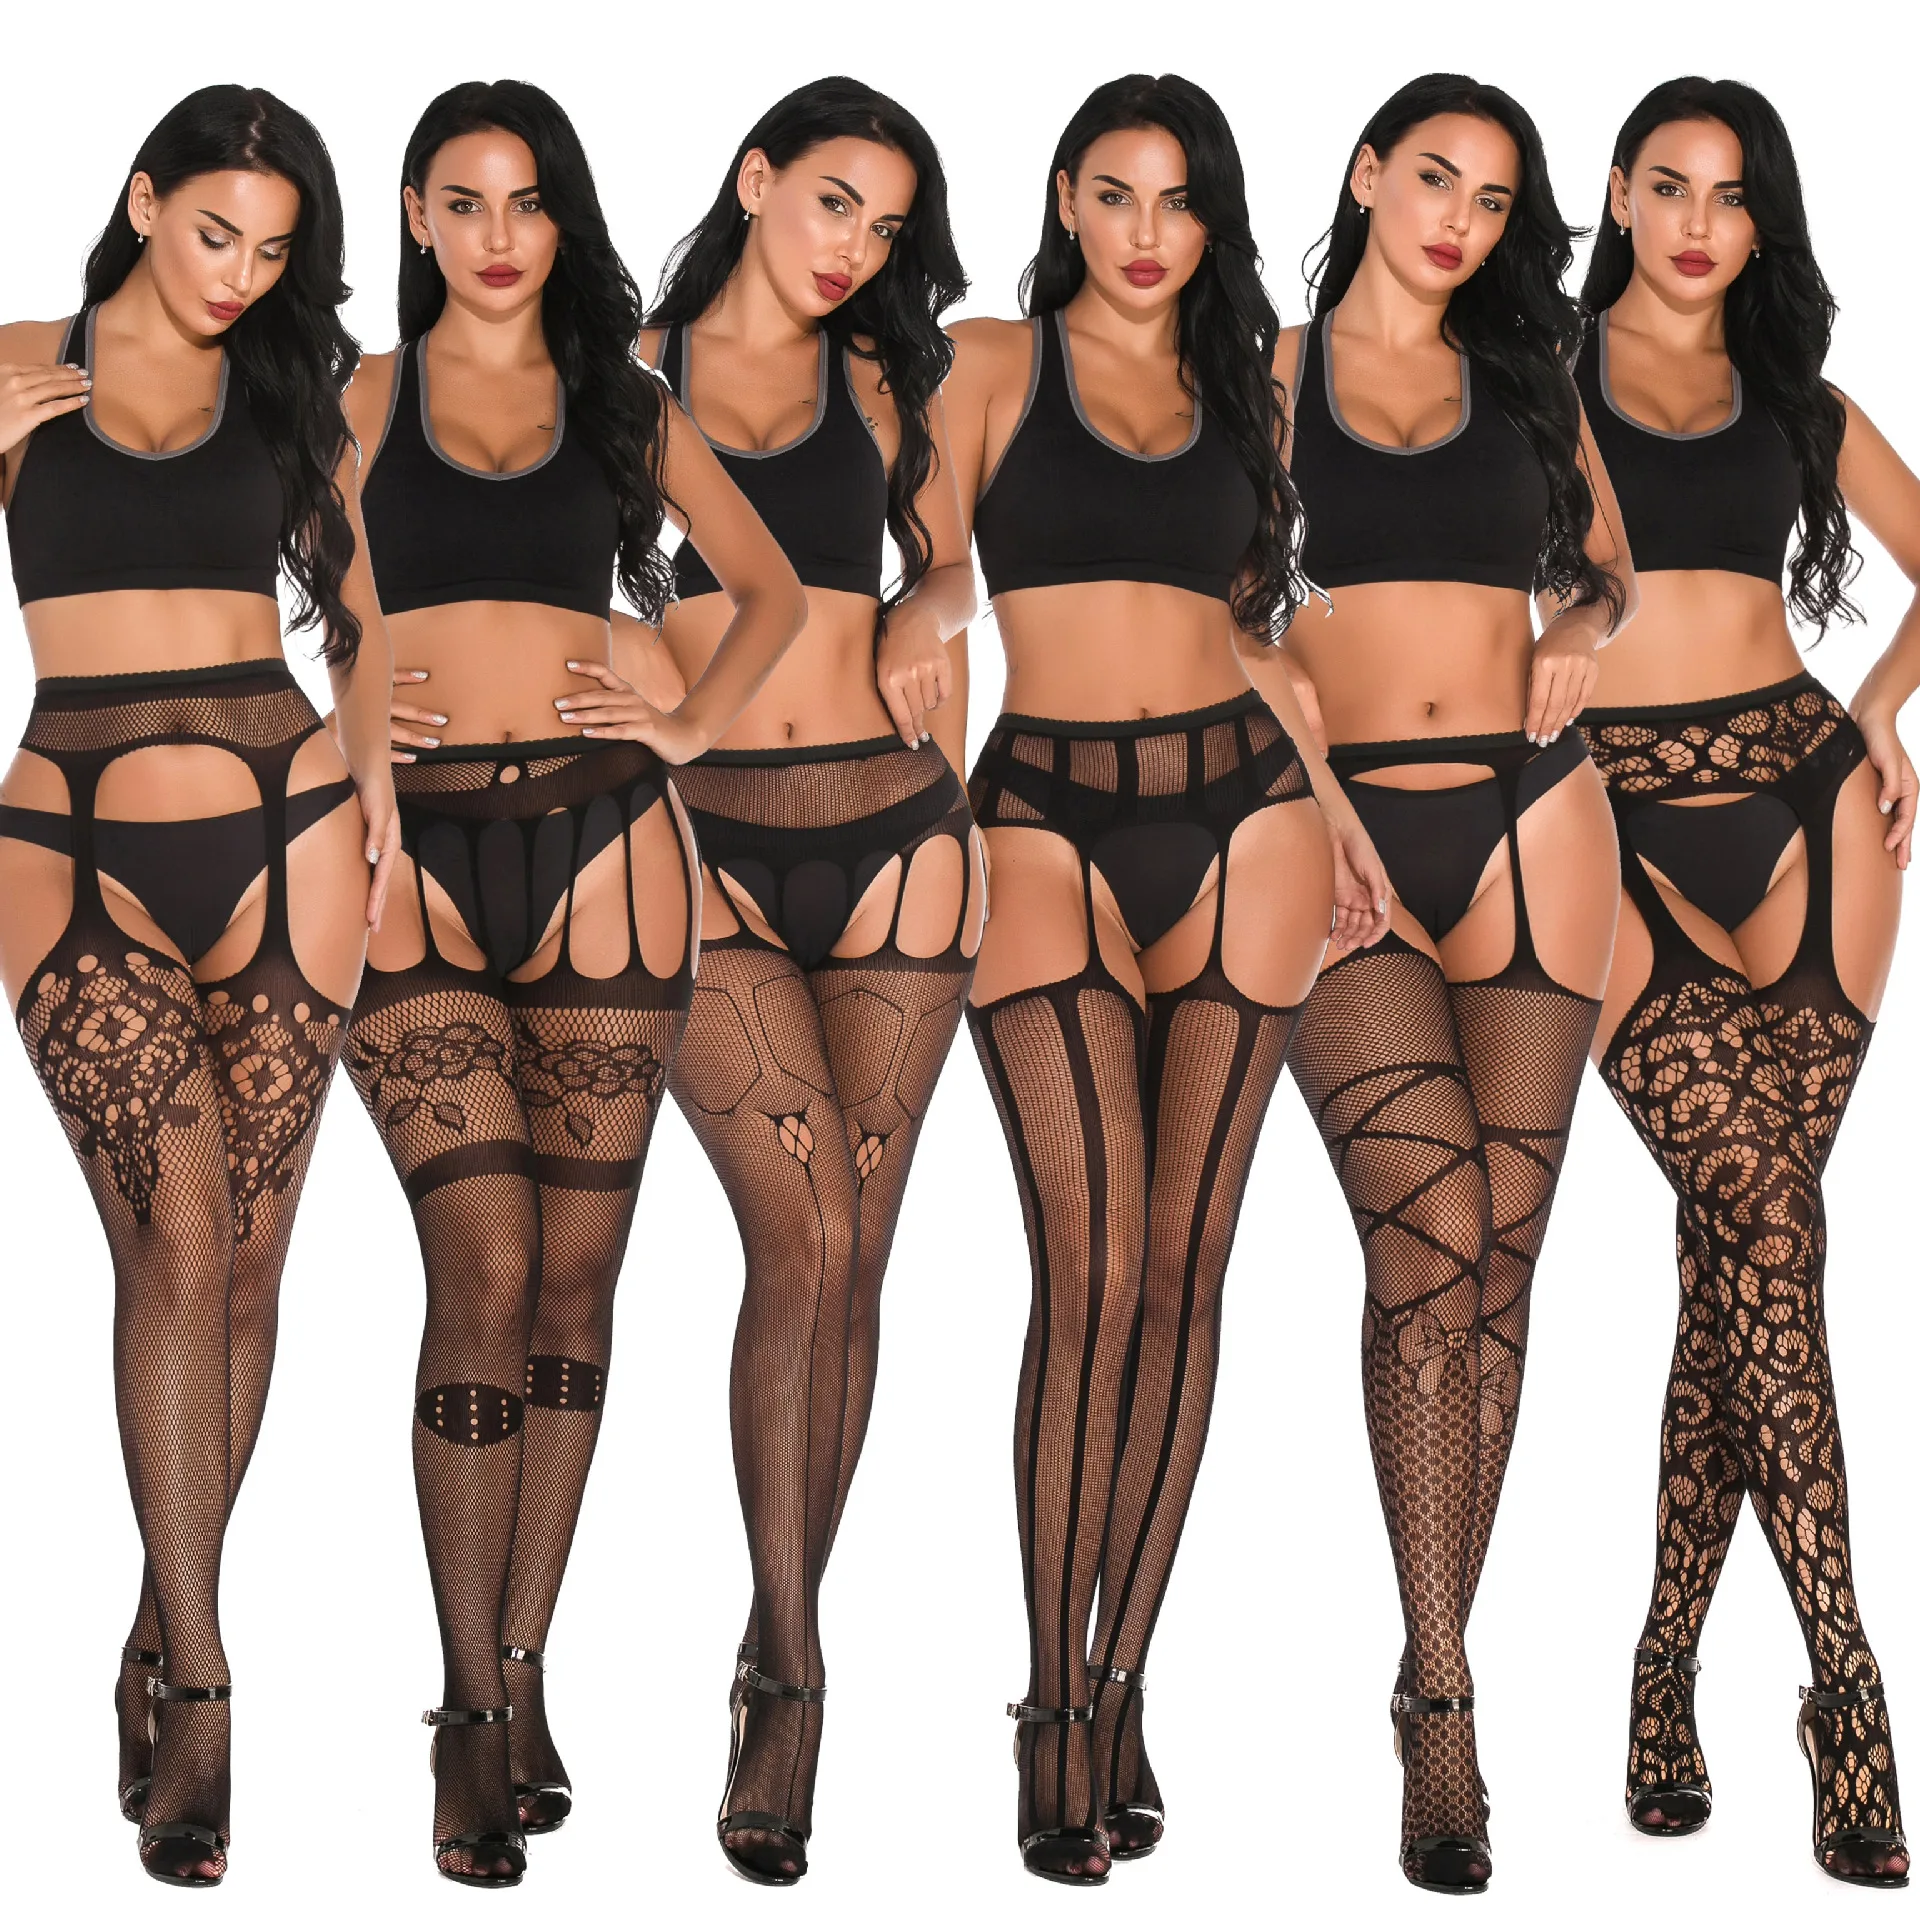 Women Fishnet Body Stockings Garter Belt Sexy Black Lace Hollow Elastic Mesh Stocking Underwear Sheer Tights Pantyhose Lingerie